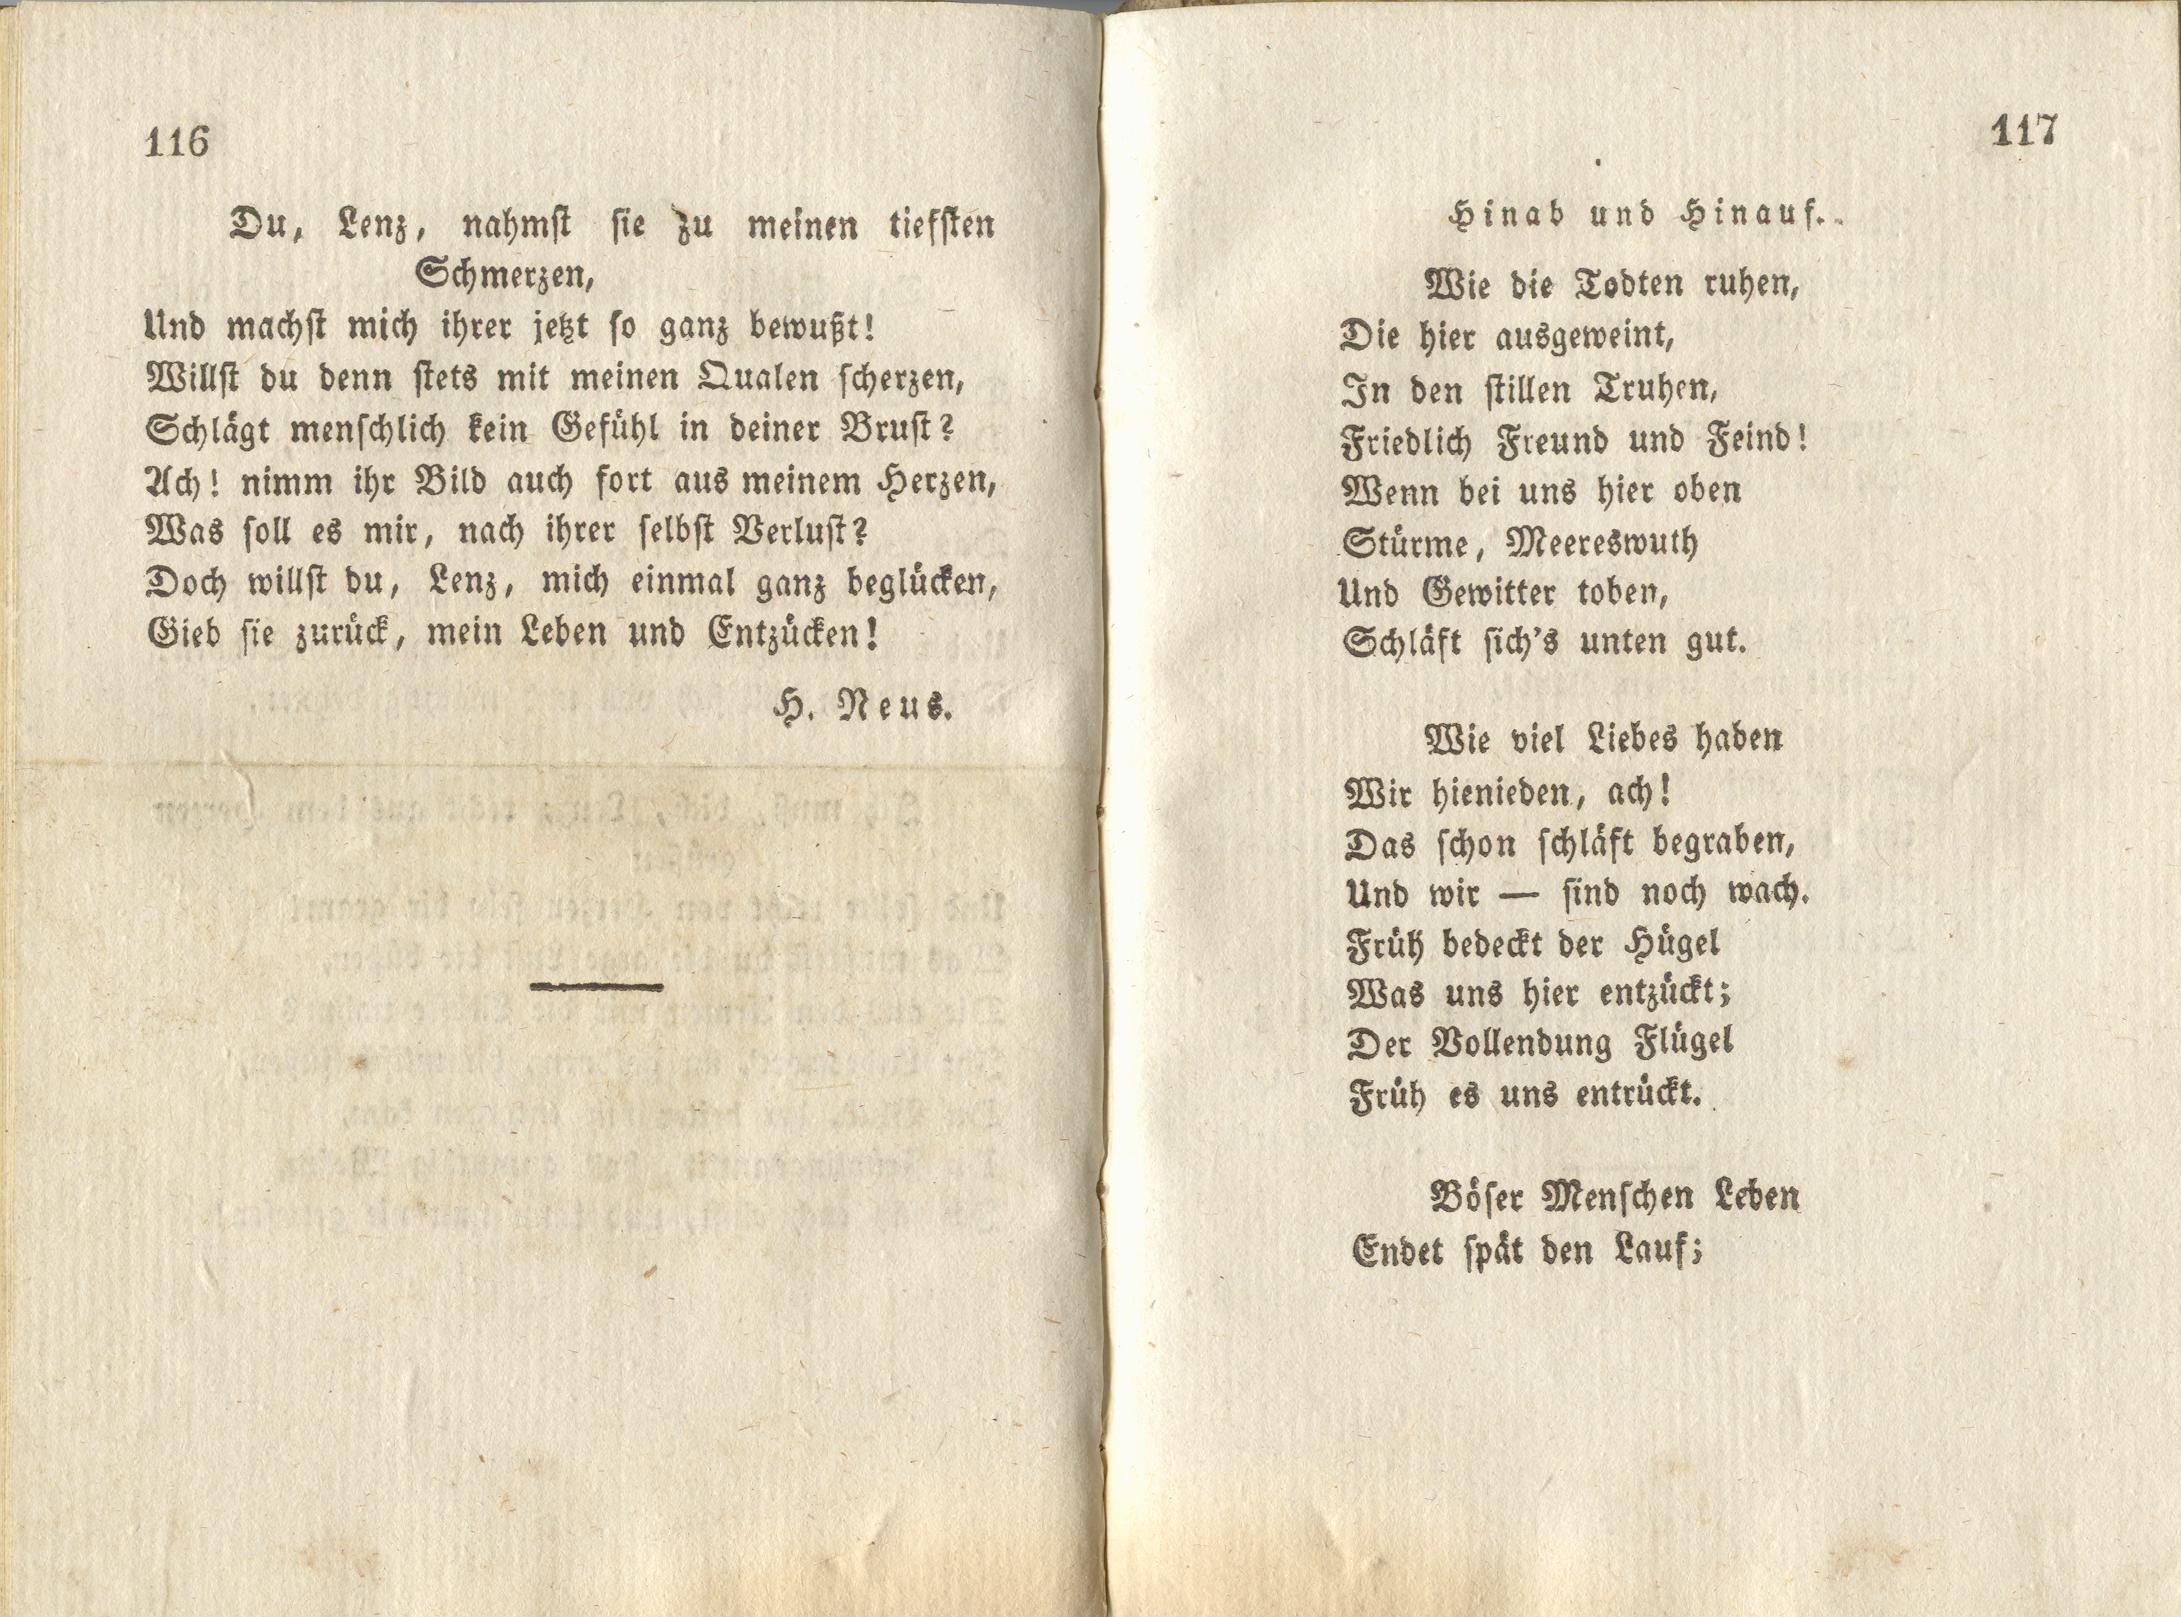 Hinab und Hinauf (1828) | 1. (116-117) Haupttext